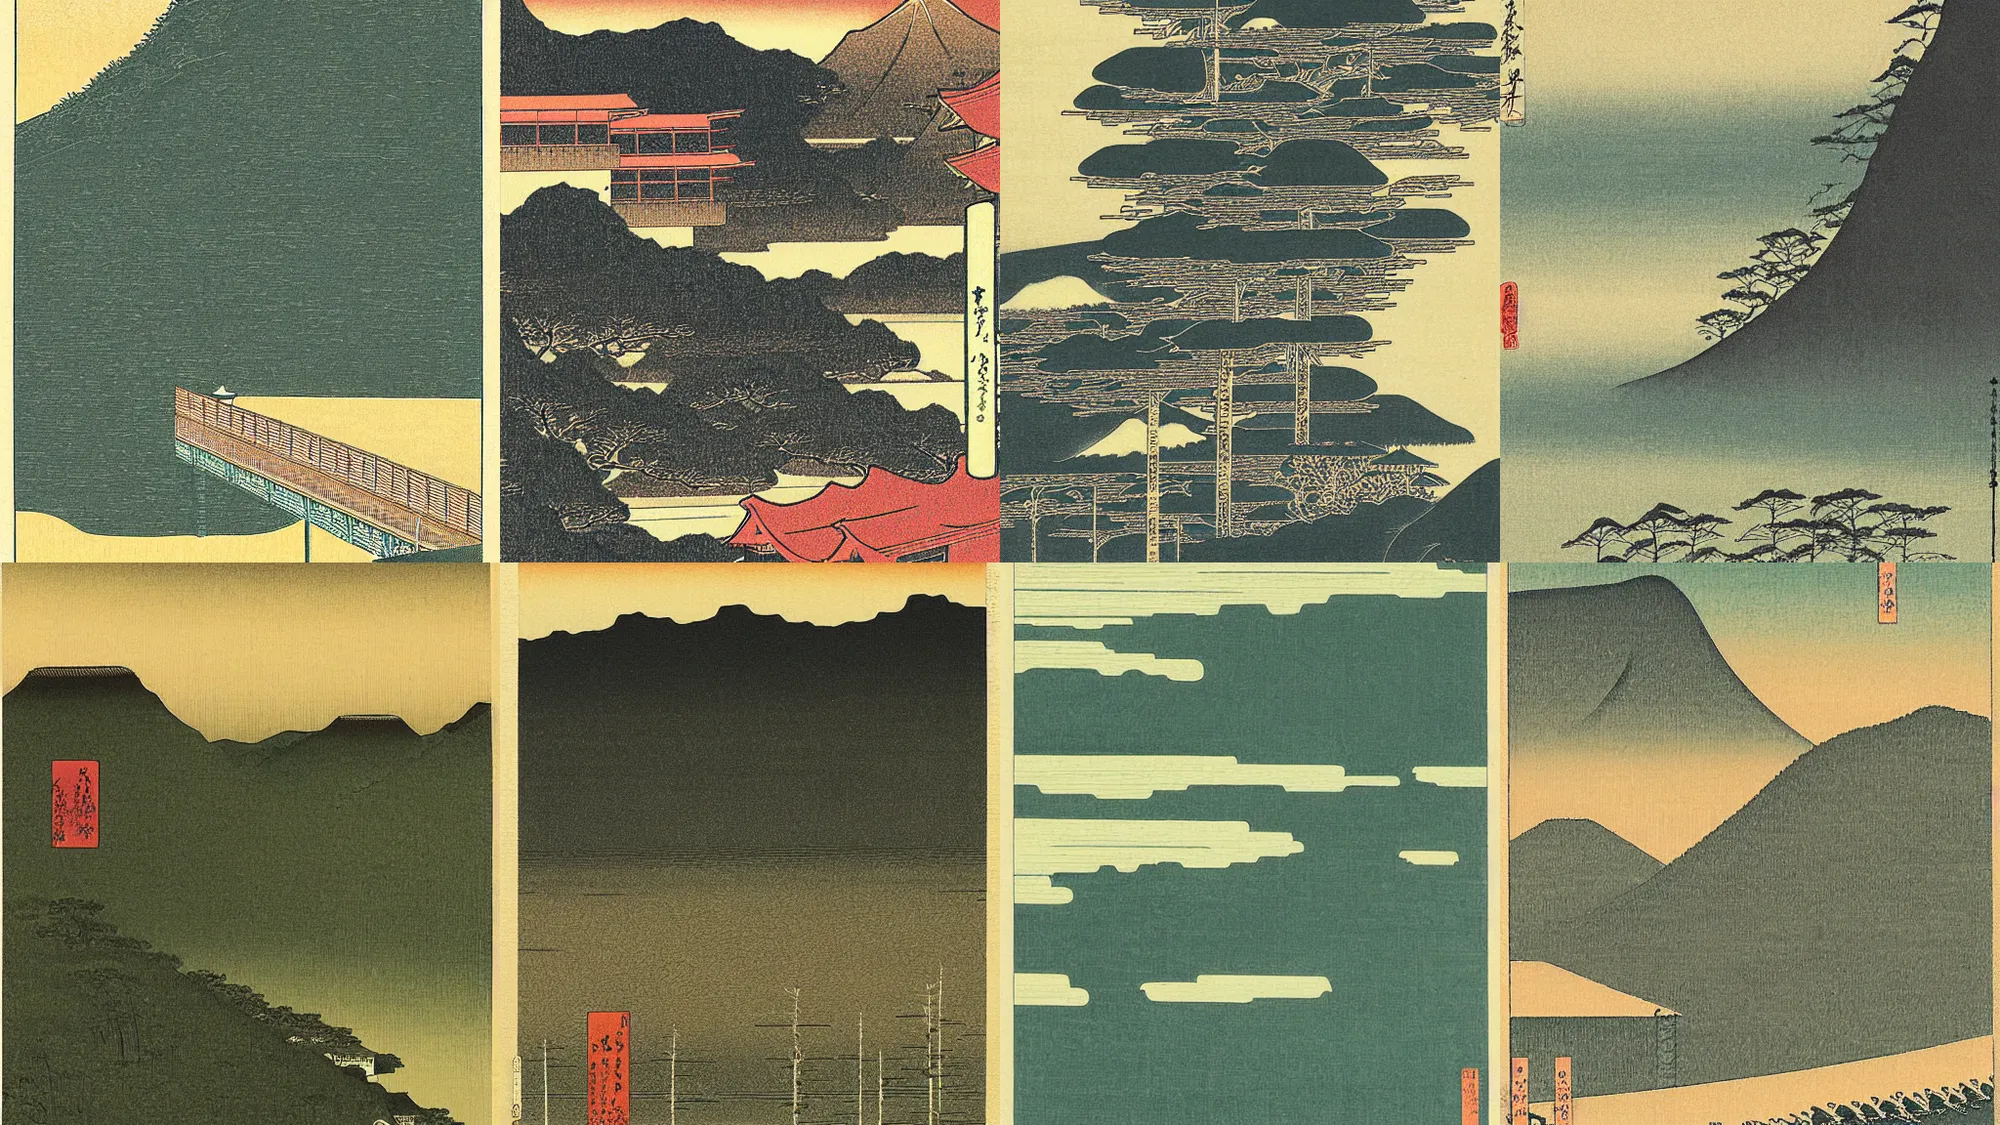 Prompt: vertical landscape by okami, shin - hanga, hasui kawase